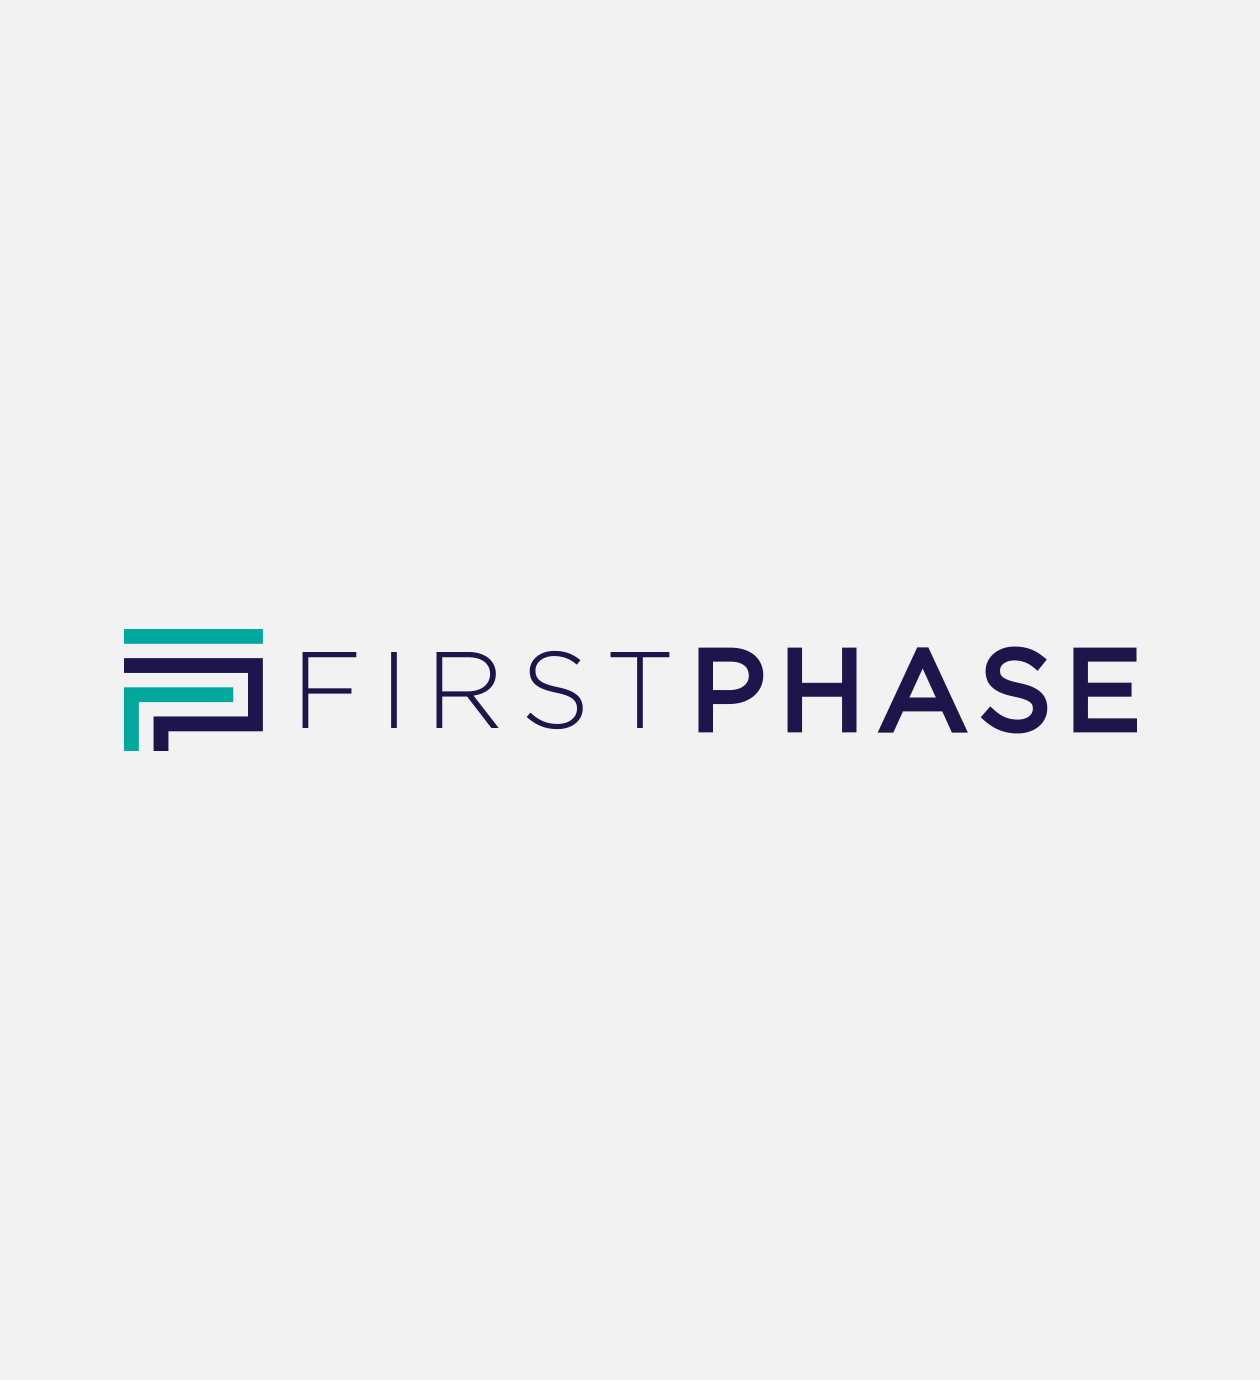 FirstPhase Logo